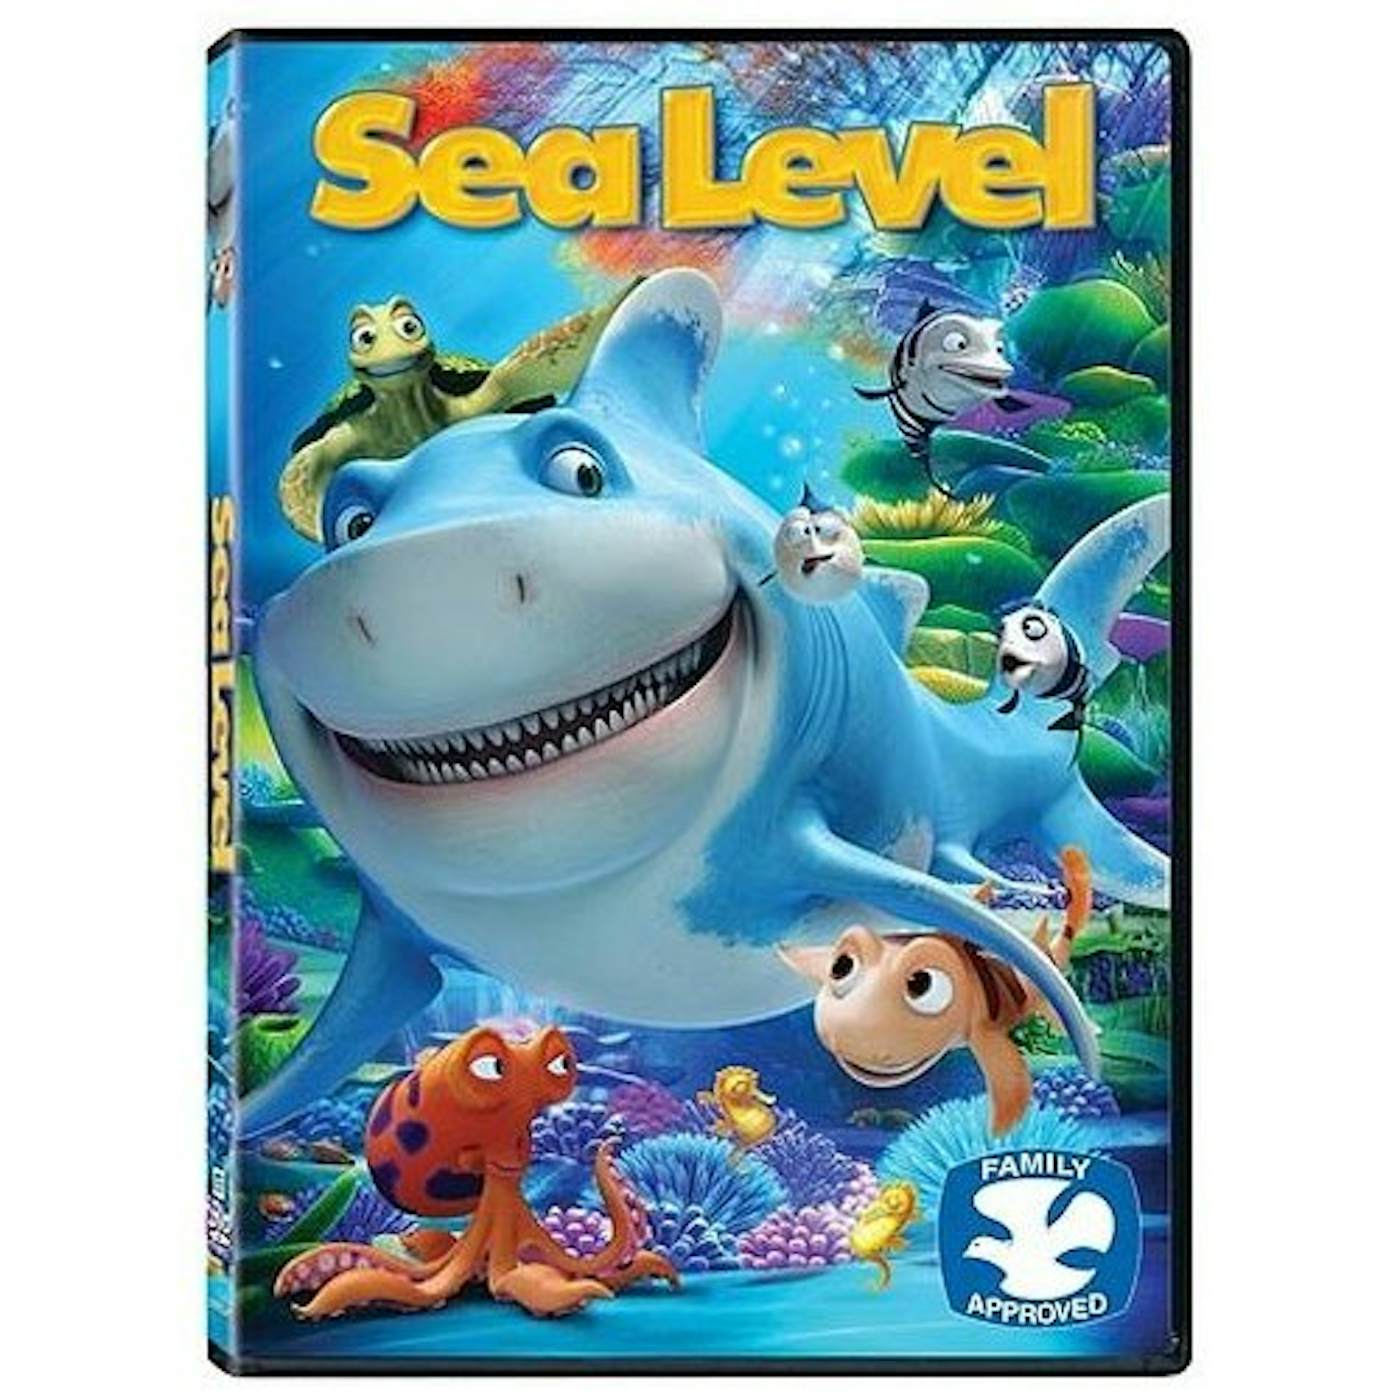 SEA LEVEL DVD